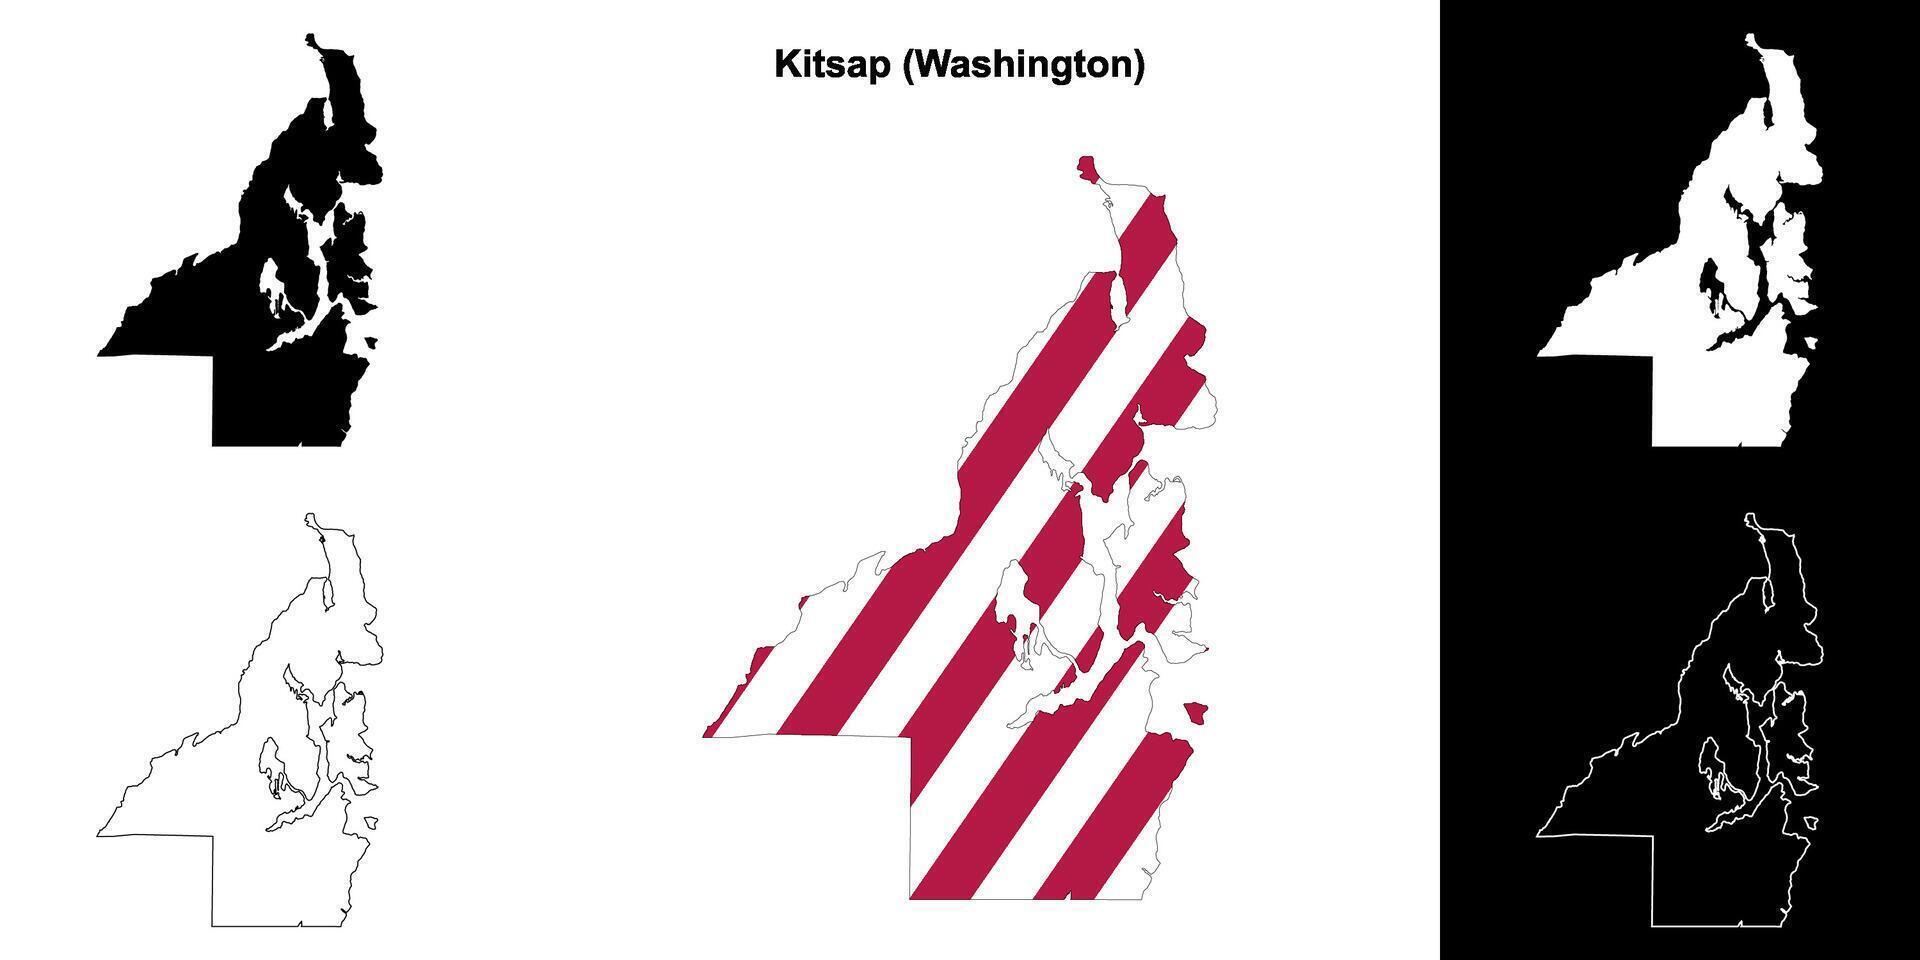 kitsap district, Washington schets kaart reeks vector